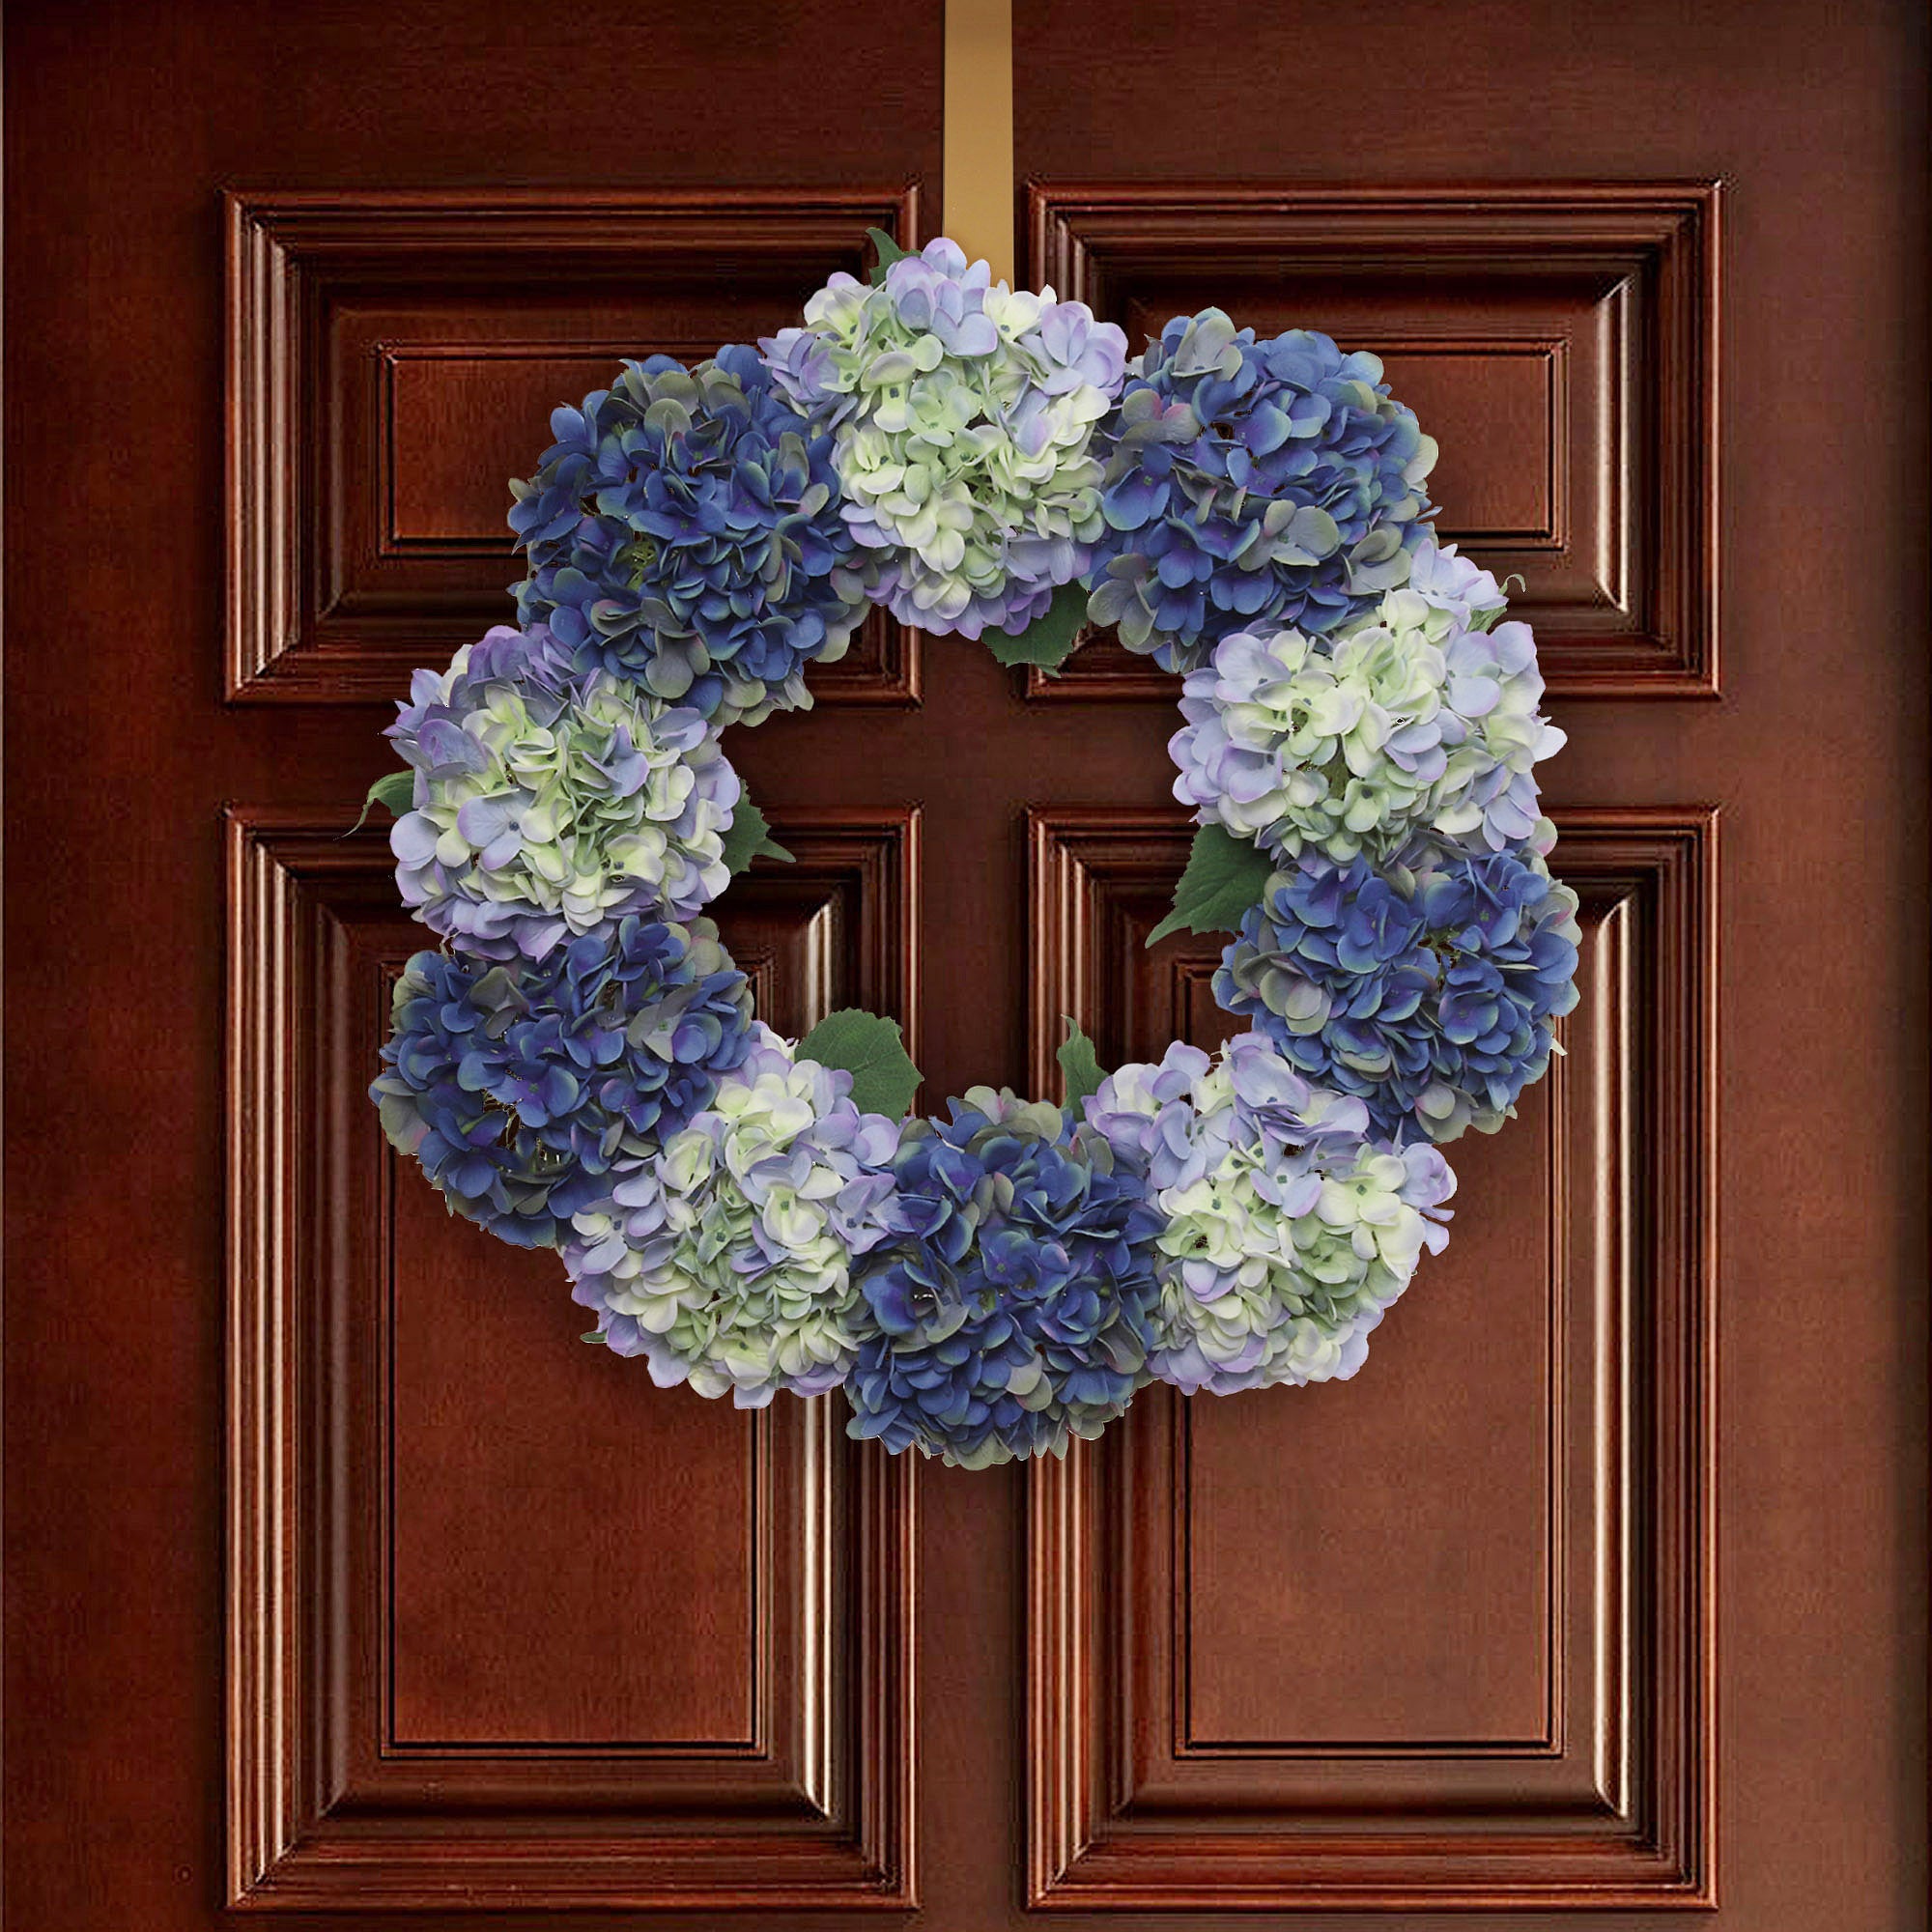 Artificial 24" Magenta & Blue Hydrangea Wreath - Handcrafted, UV Resistant, All-Season, Indoor/Outdoor Decor, Perfect for Home, Wedding, Event Hydrangea Wreath ArtificialFlowers   